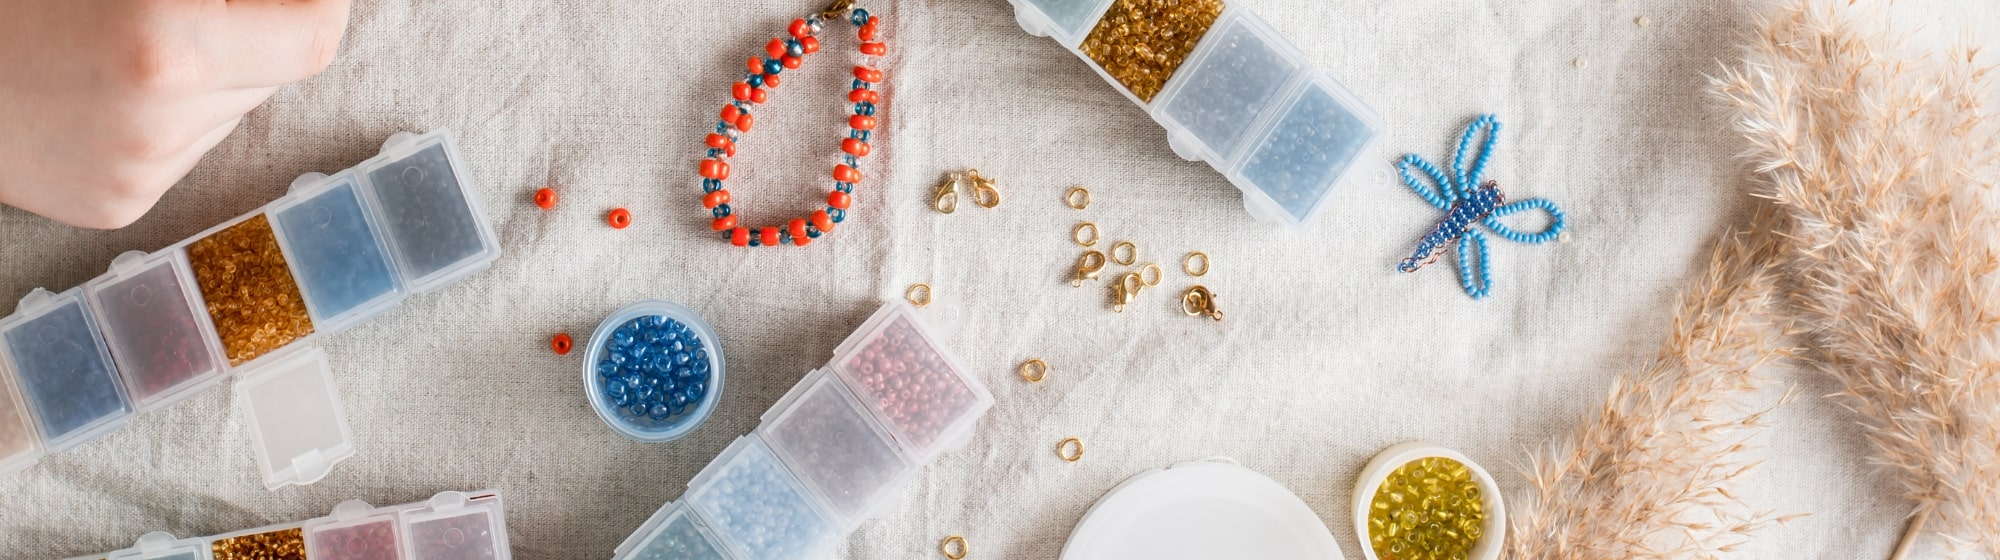 Atelier perles et bijoux fait main